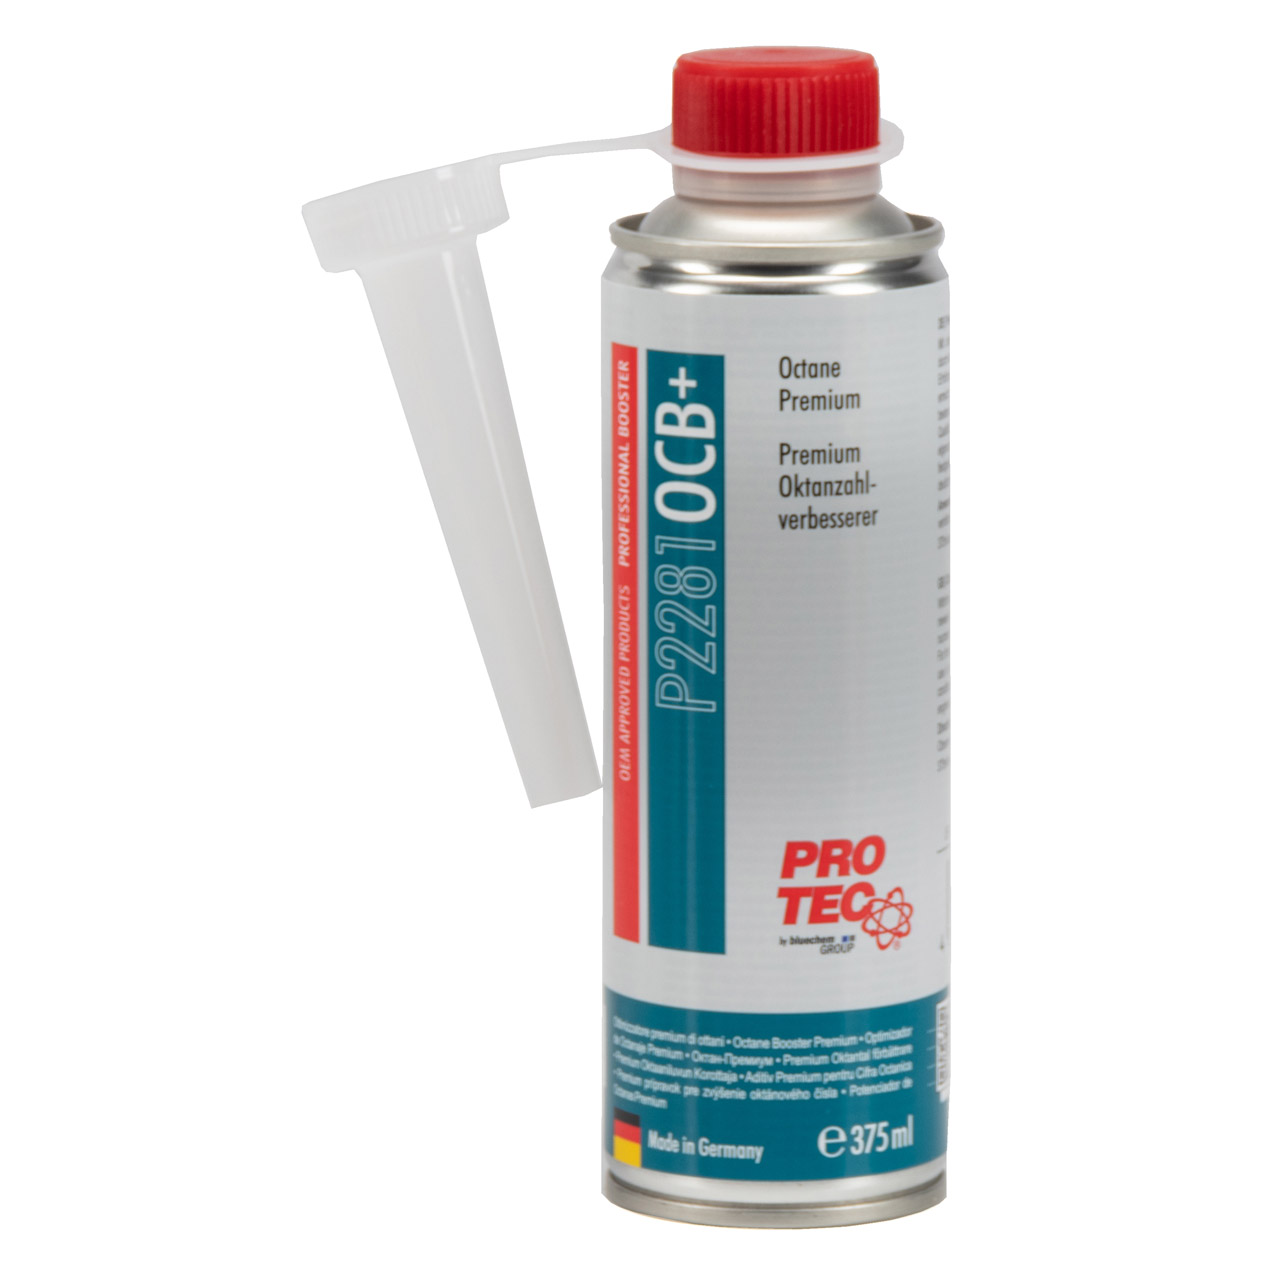 PROTEC P2281 OCB+ Premium Oktanzahlverbesserer Benzinadditiv Additiv 375ml